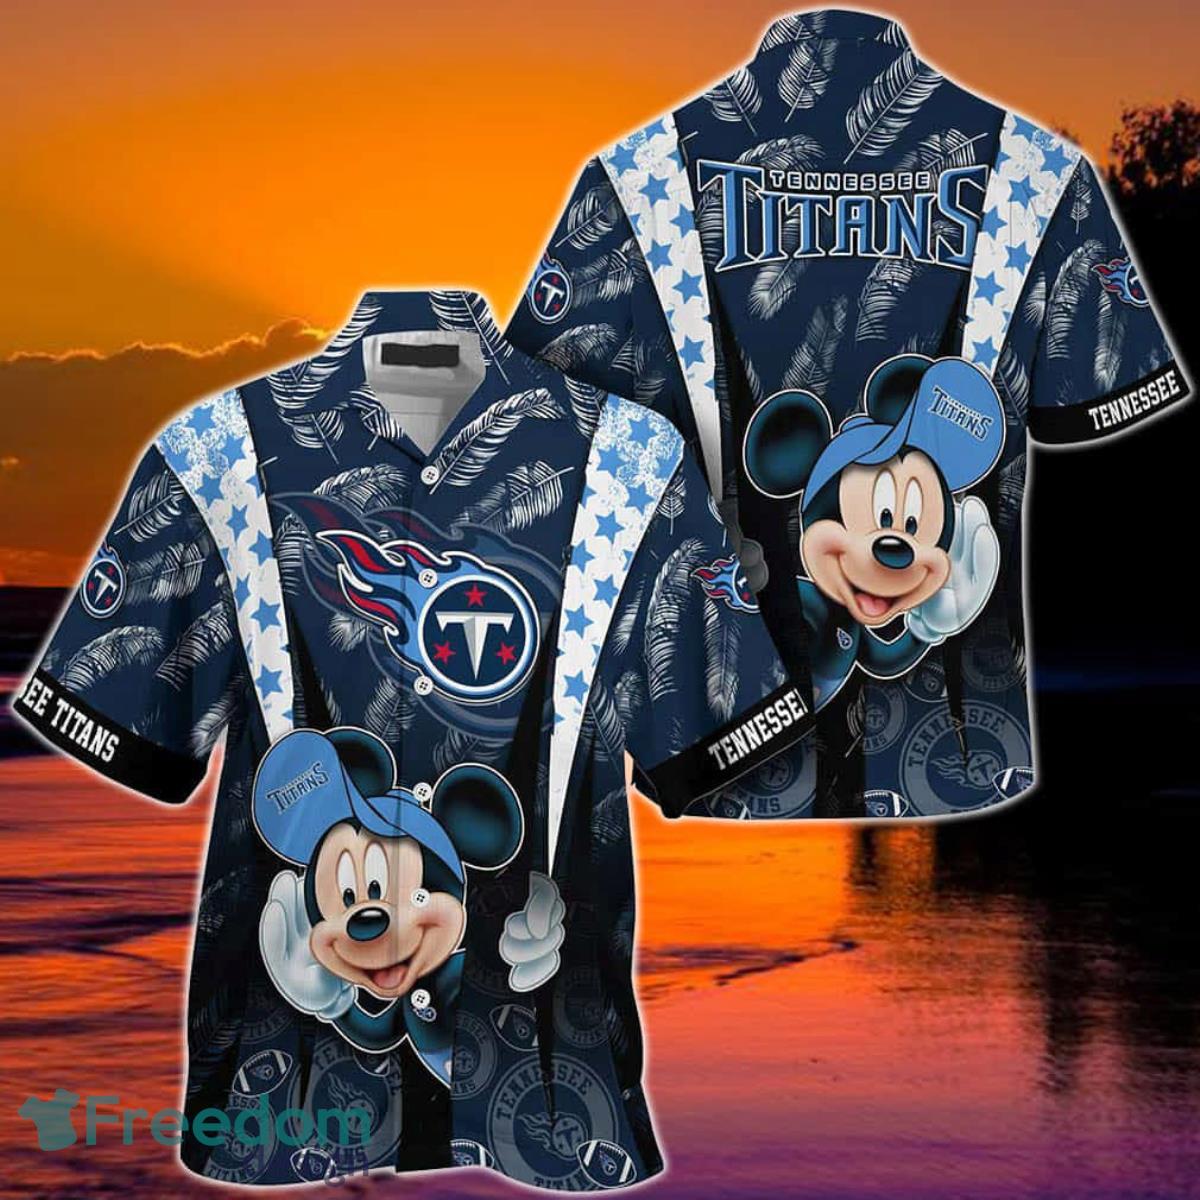 Tennessee Titans Custom Name NFL Hawaiian Shirt And Shorts Gift